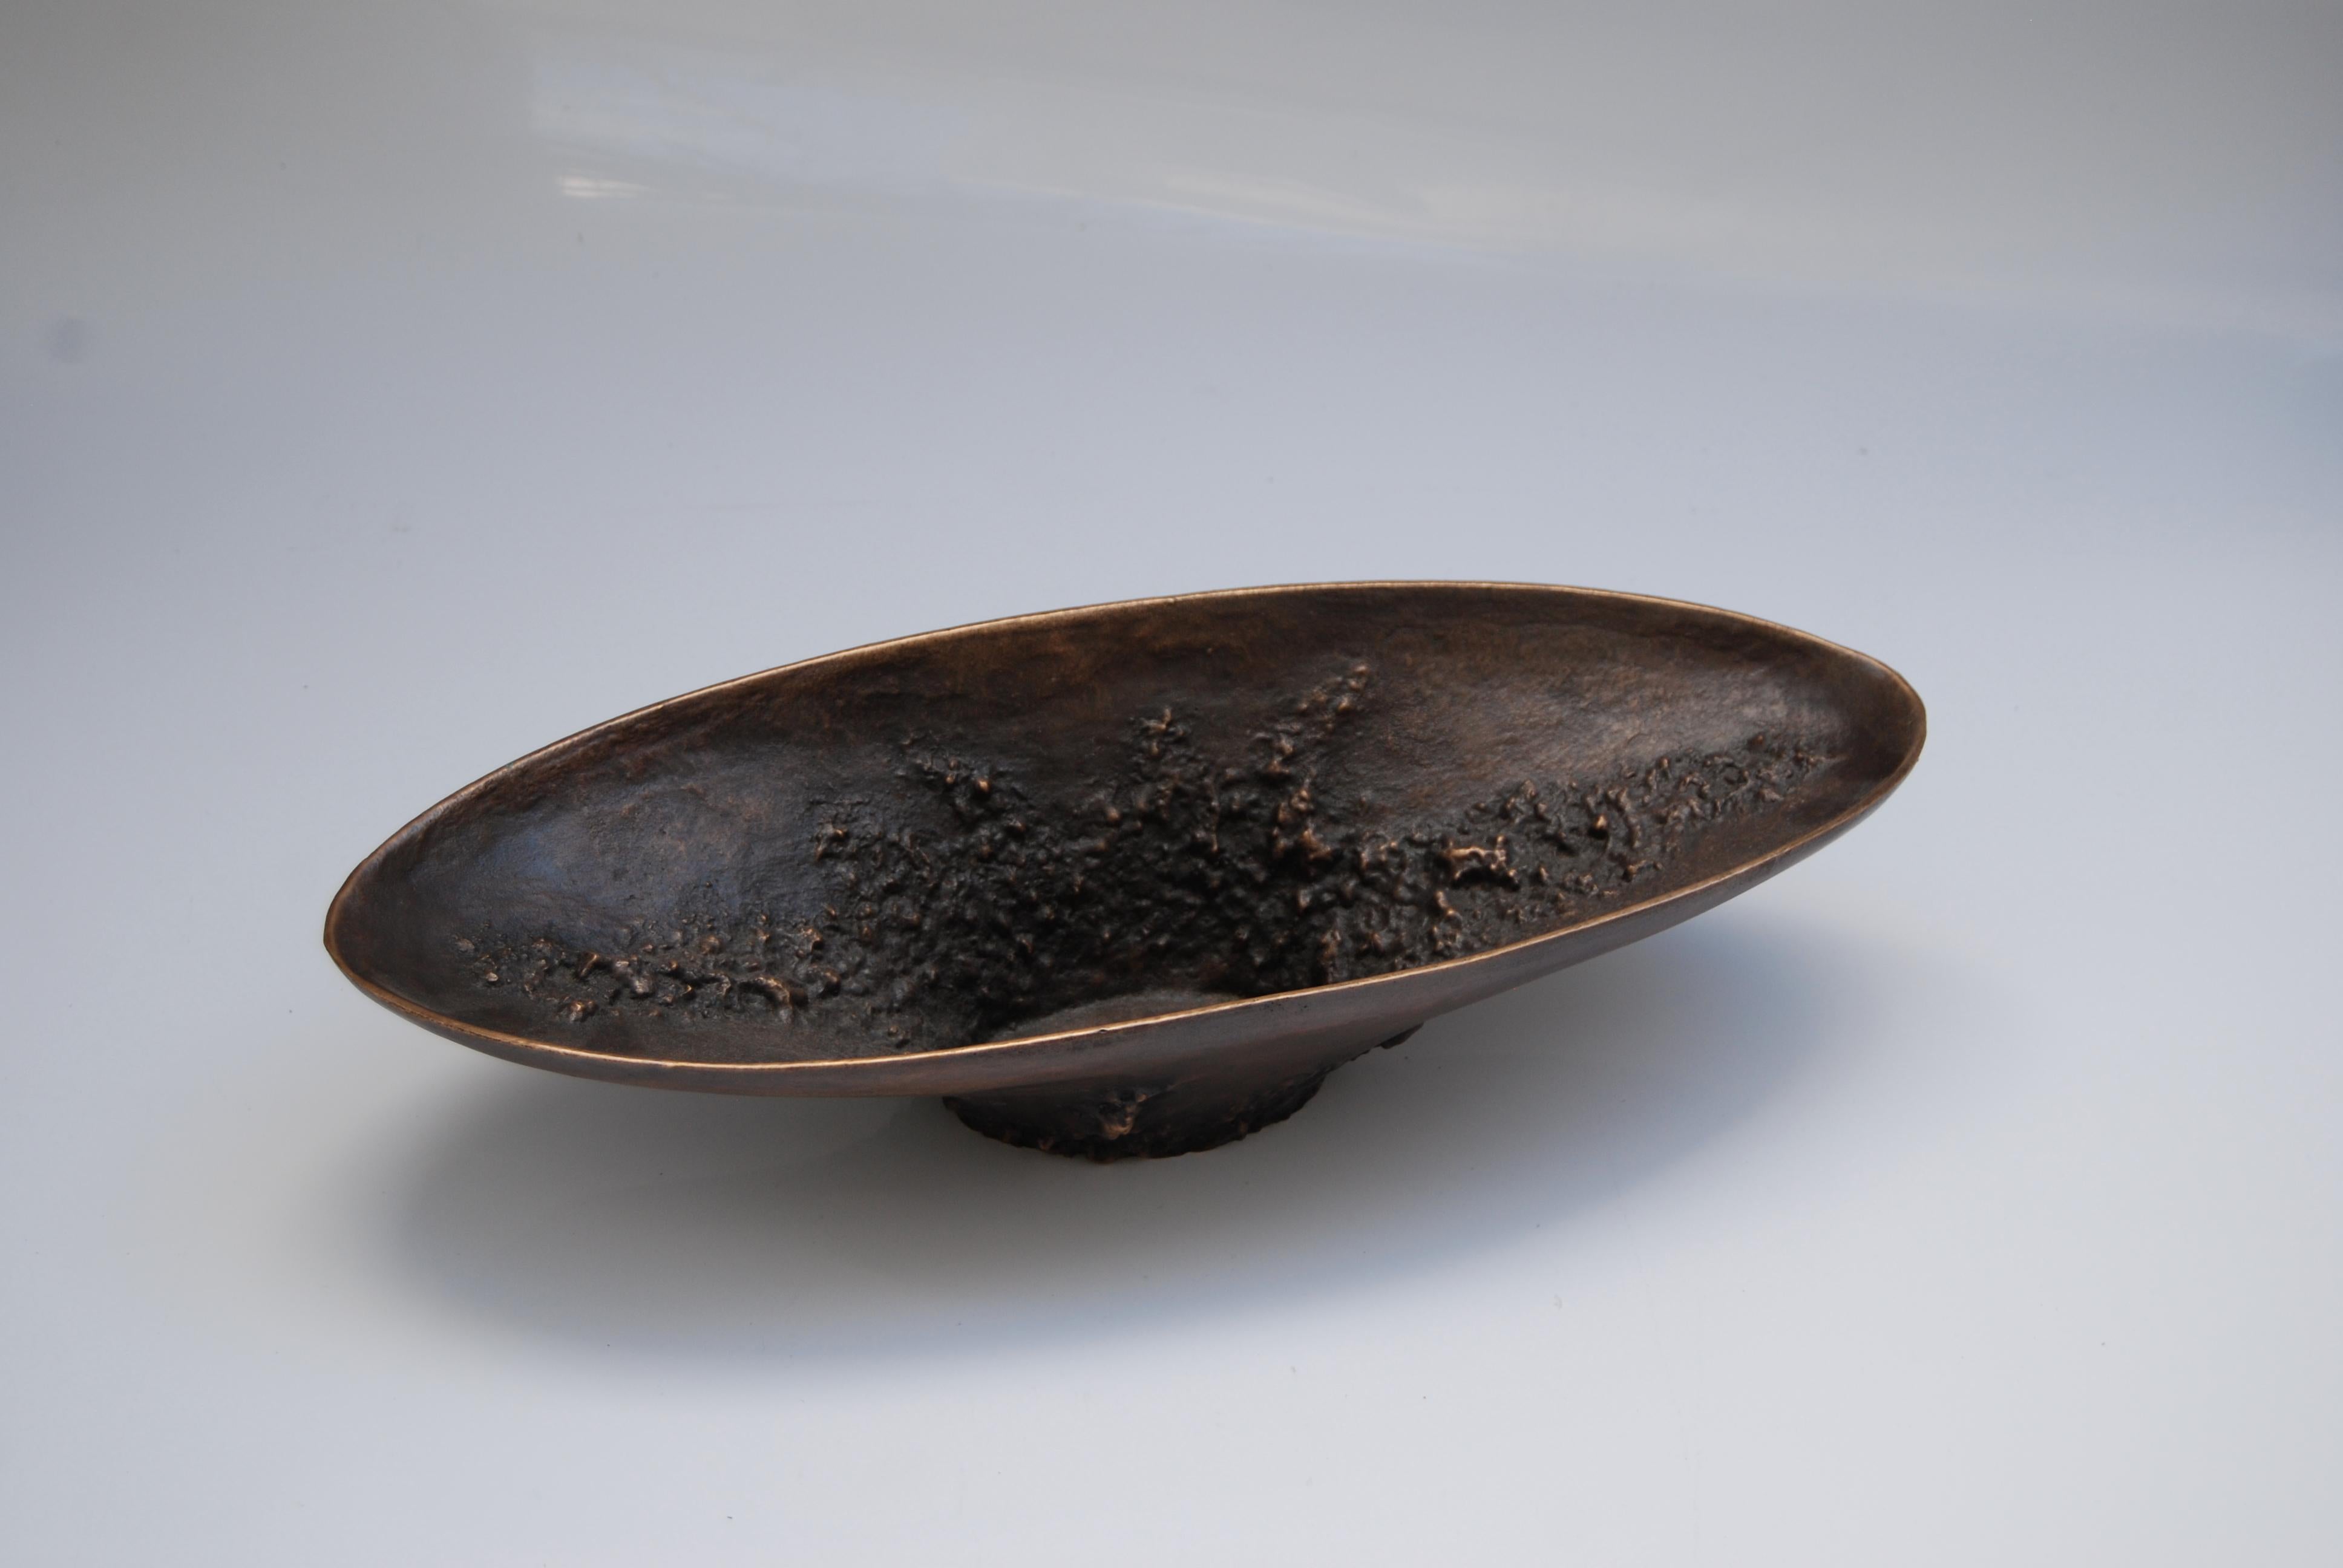 Set of 2 long bowls in dark bronze by Fakasaka Design
Dimensions: W 41.5 x D 16 x H 9.5 cm
Materials: Dark bronze.
     